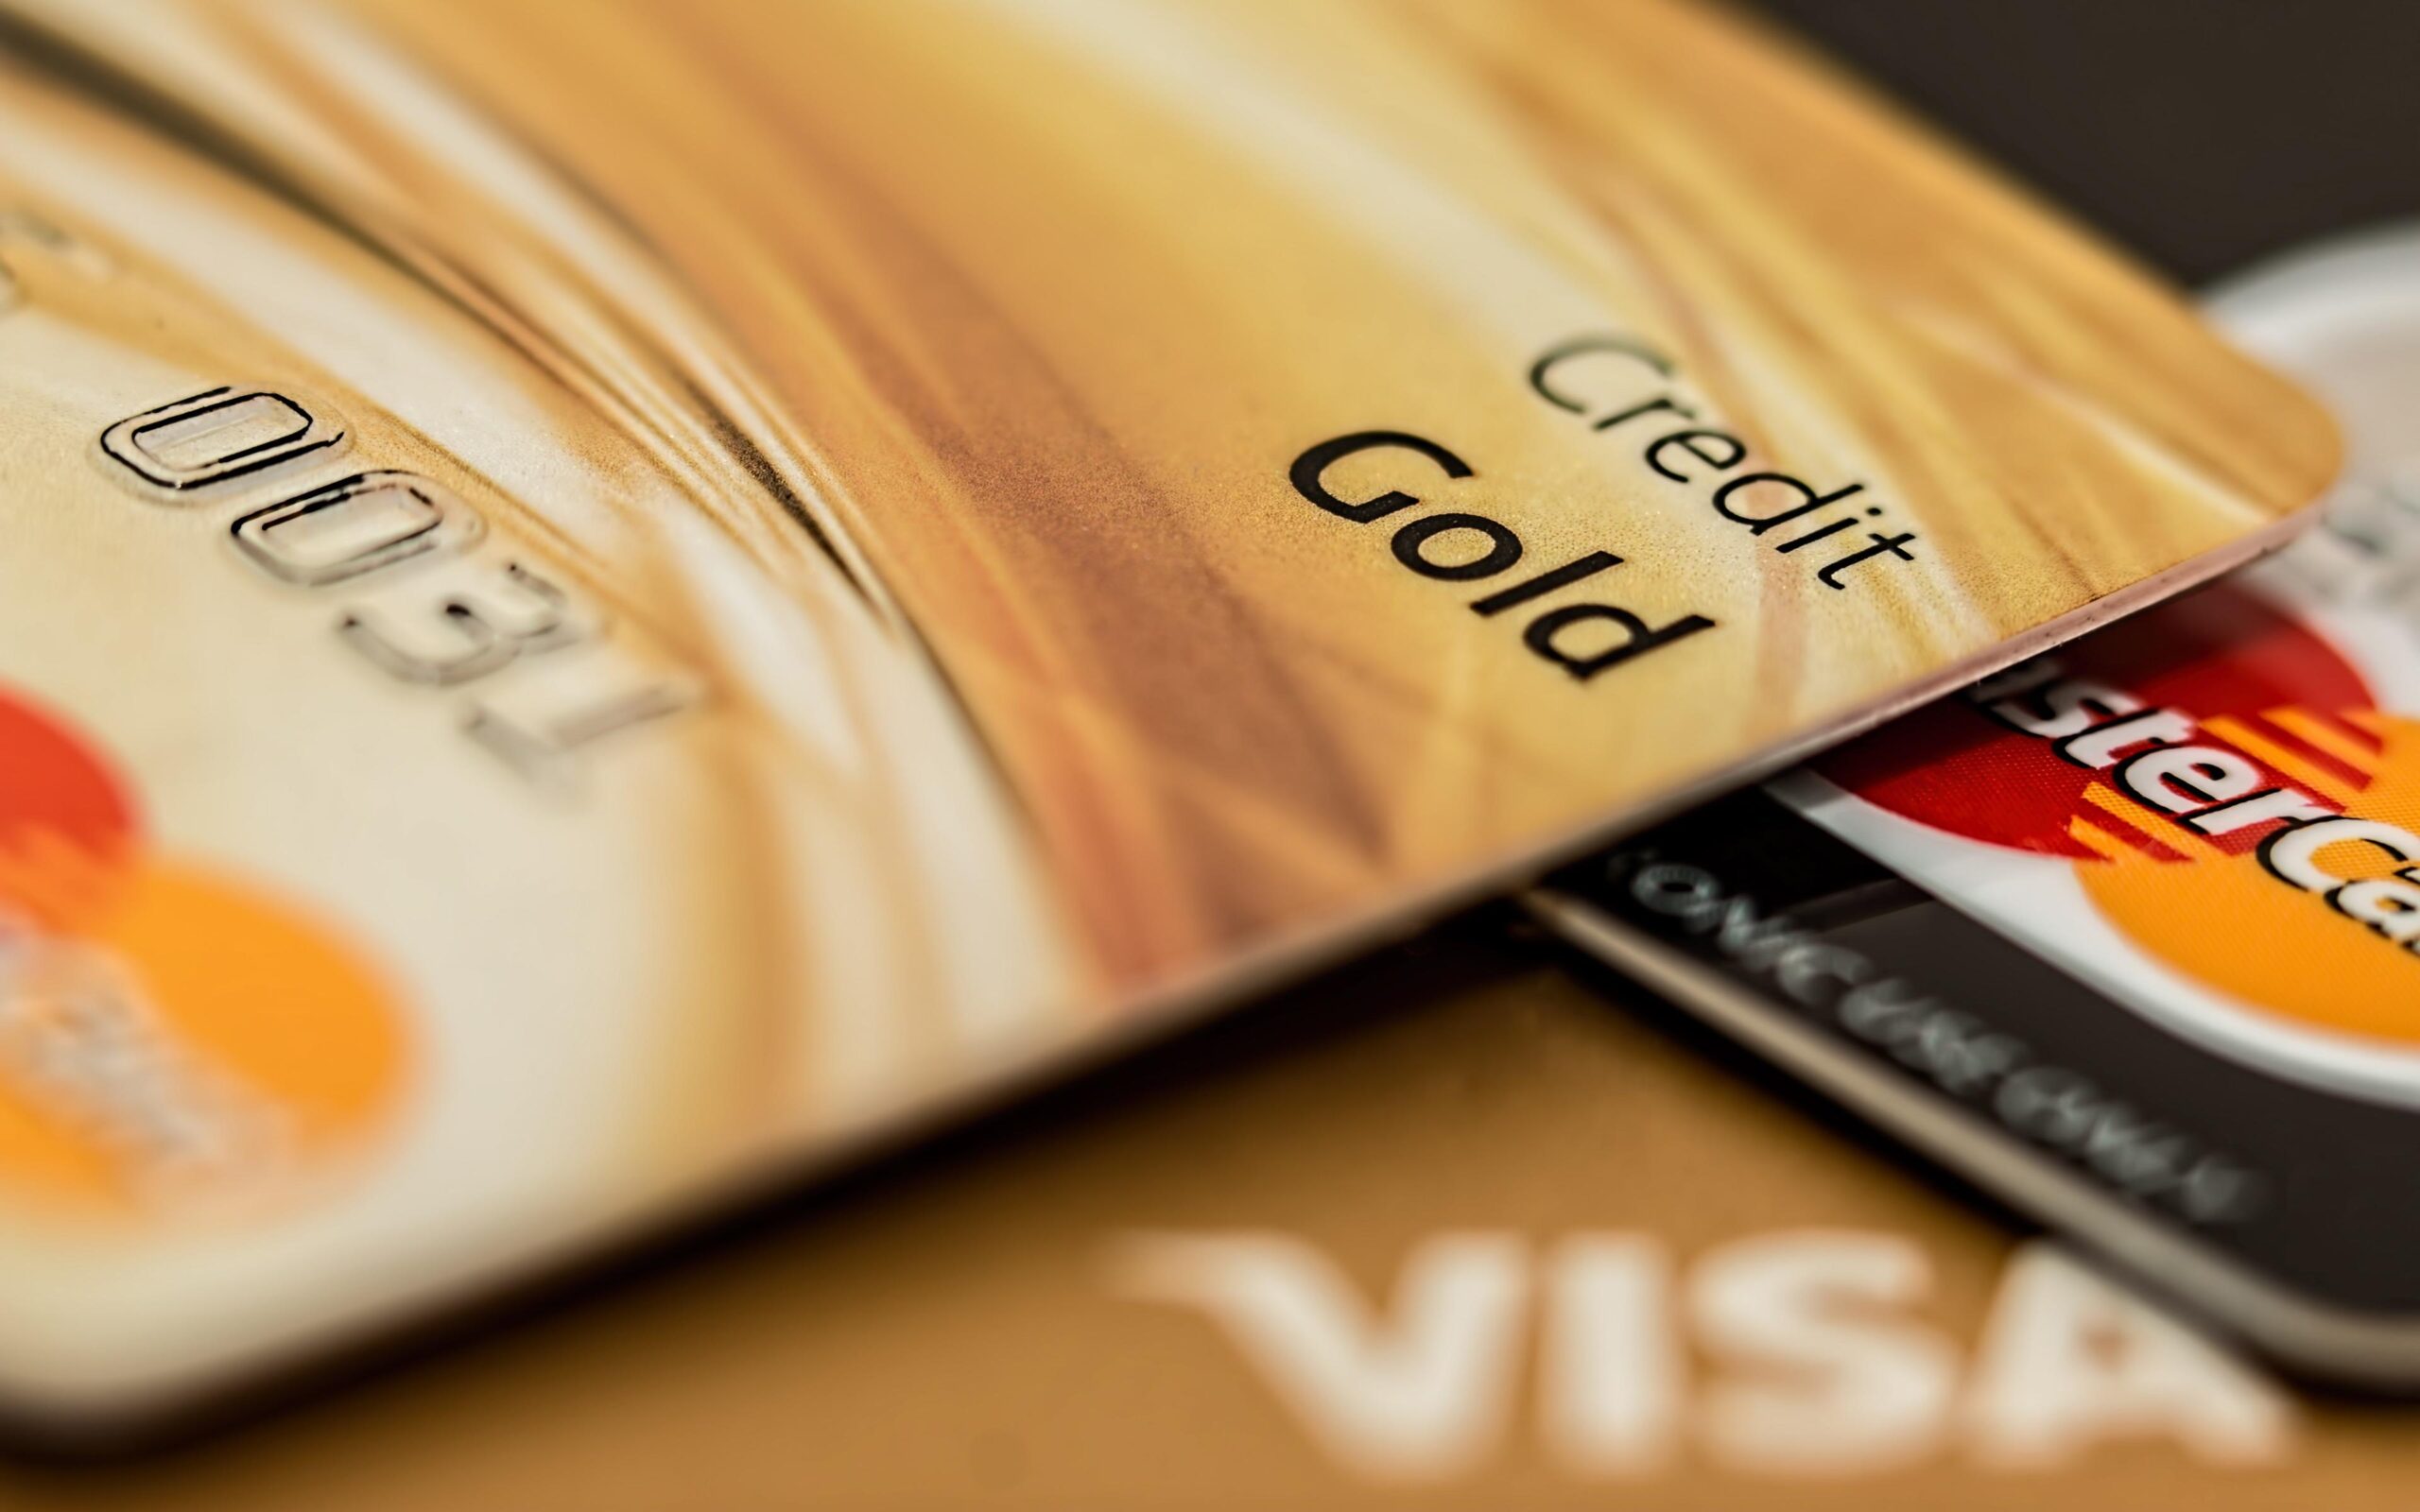 Download wallpapers credit cards, k, VISA, bank, close